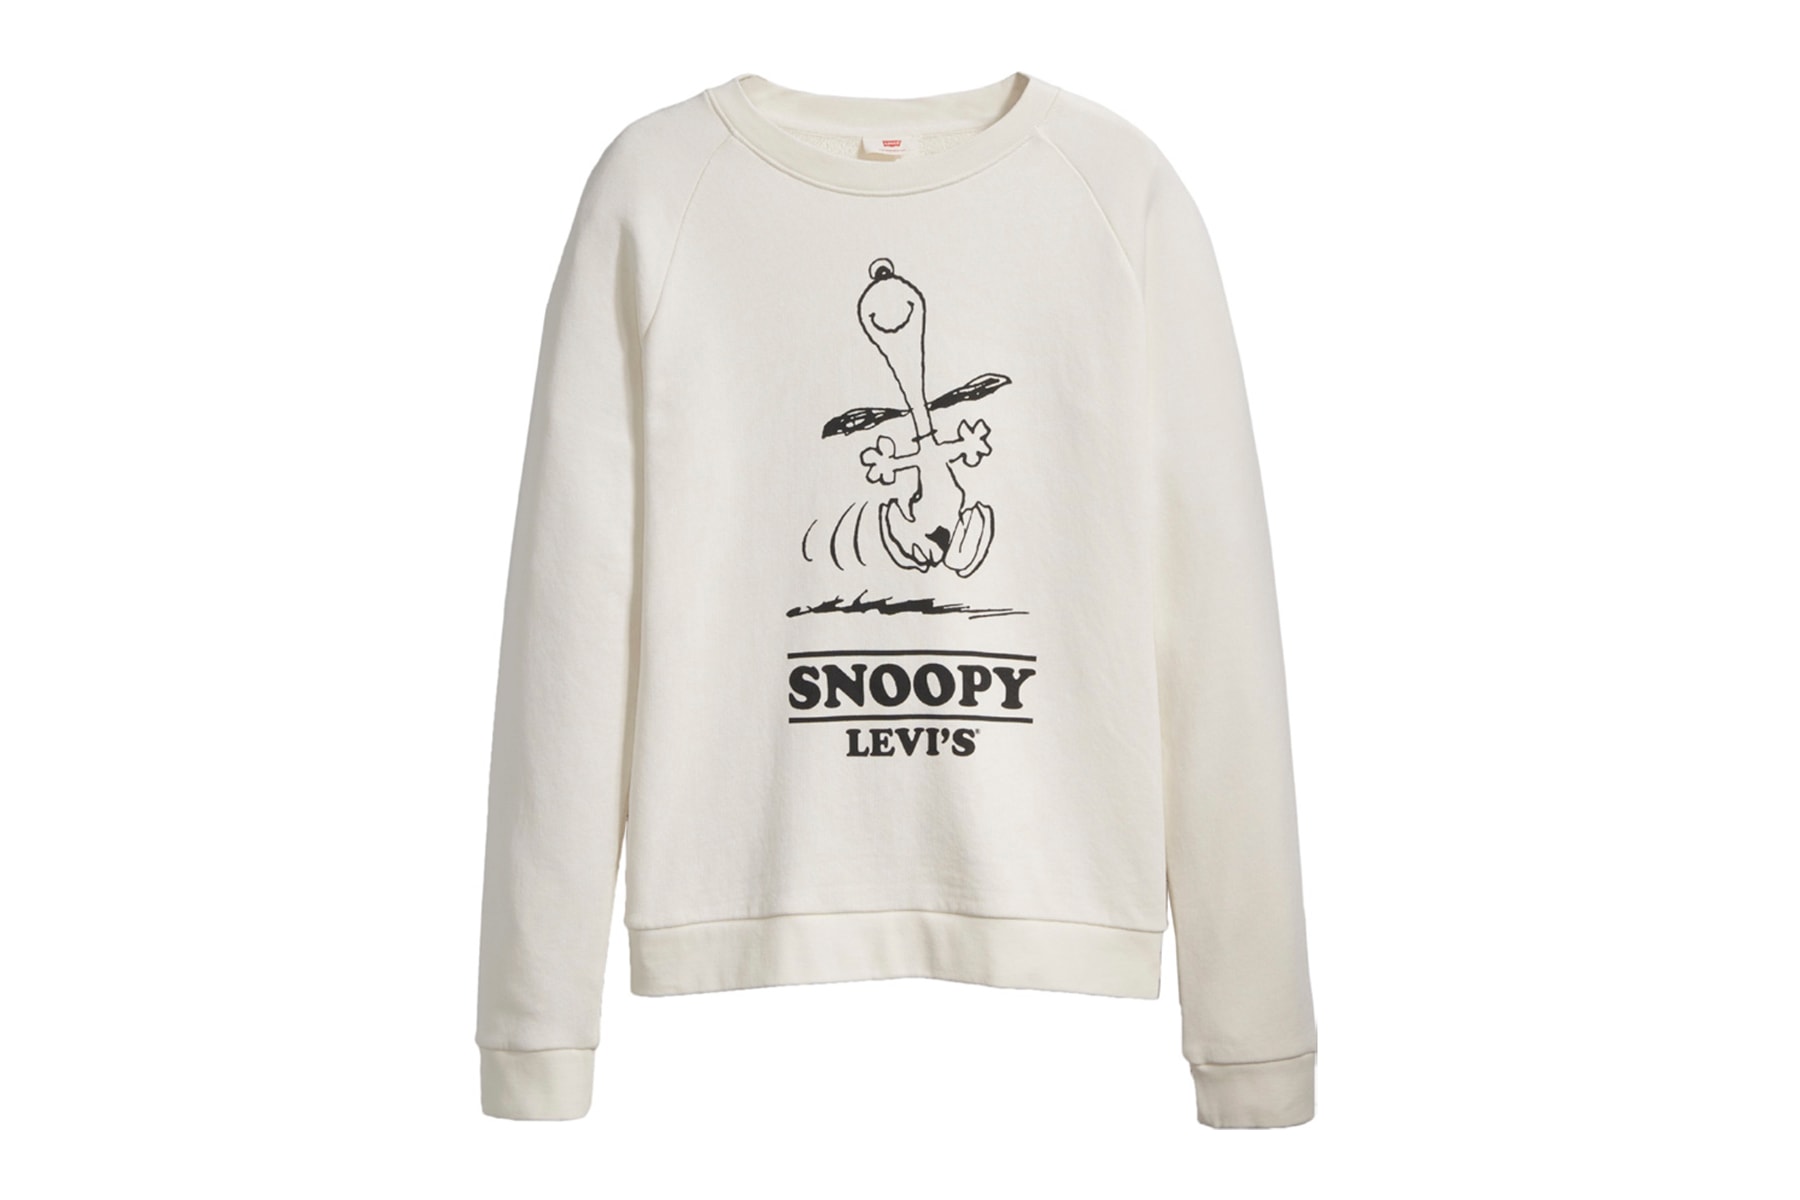 Levis Peanuts Snoopy Year of the Dog Collaboration Crewneck Sweatshirt